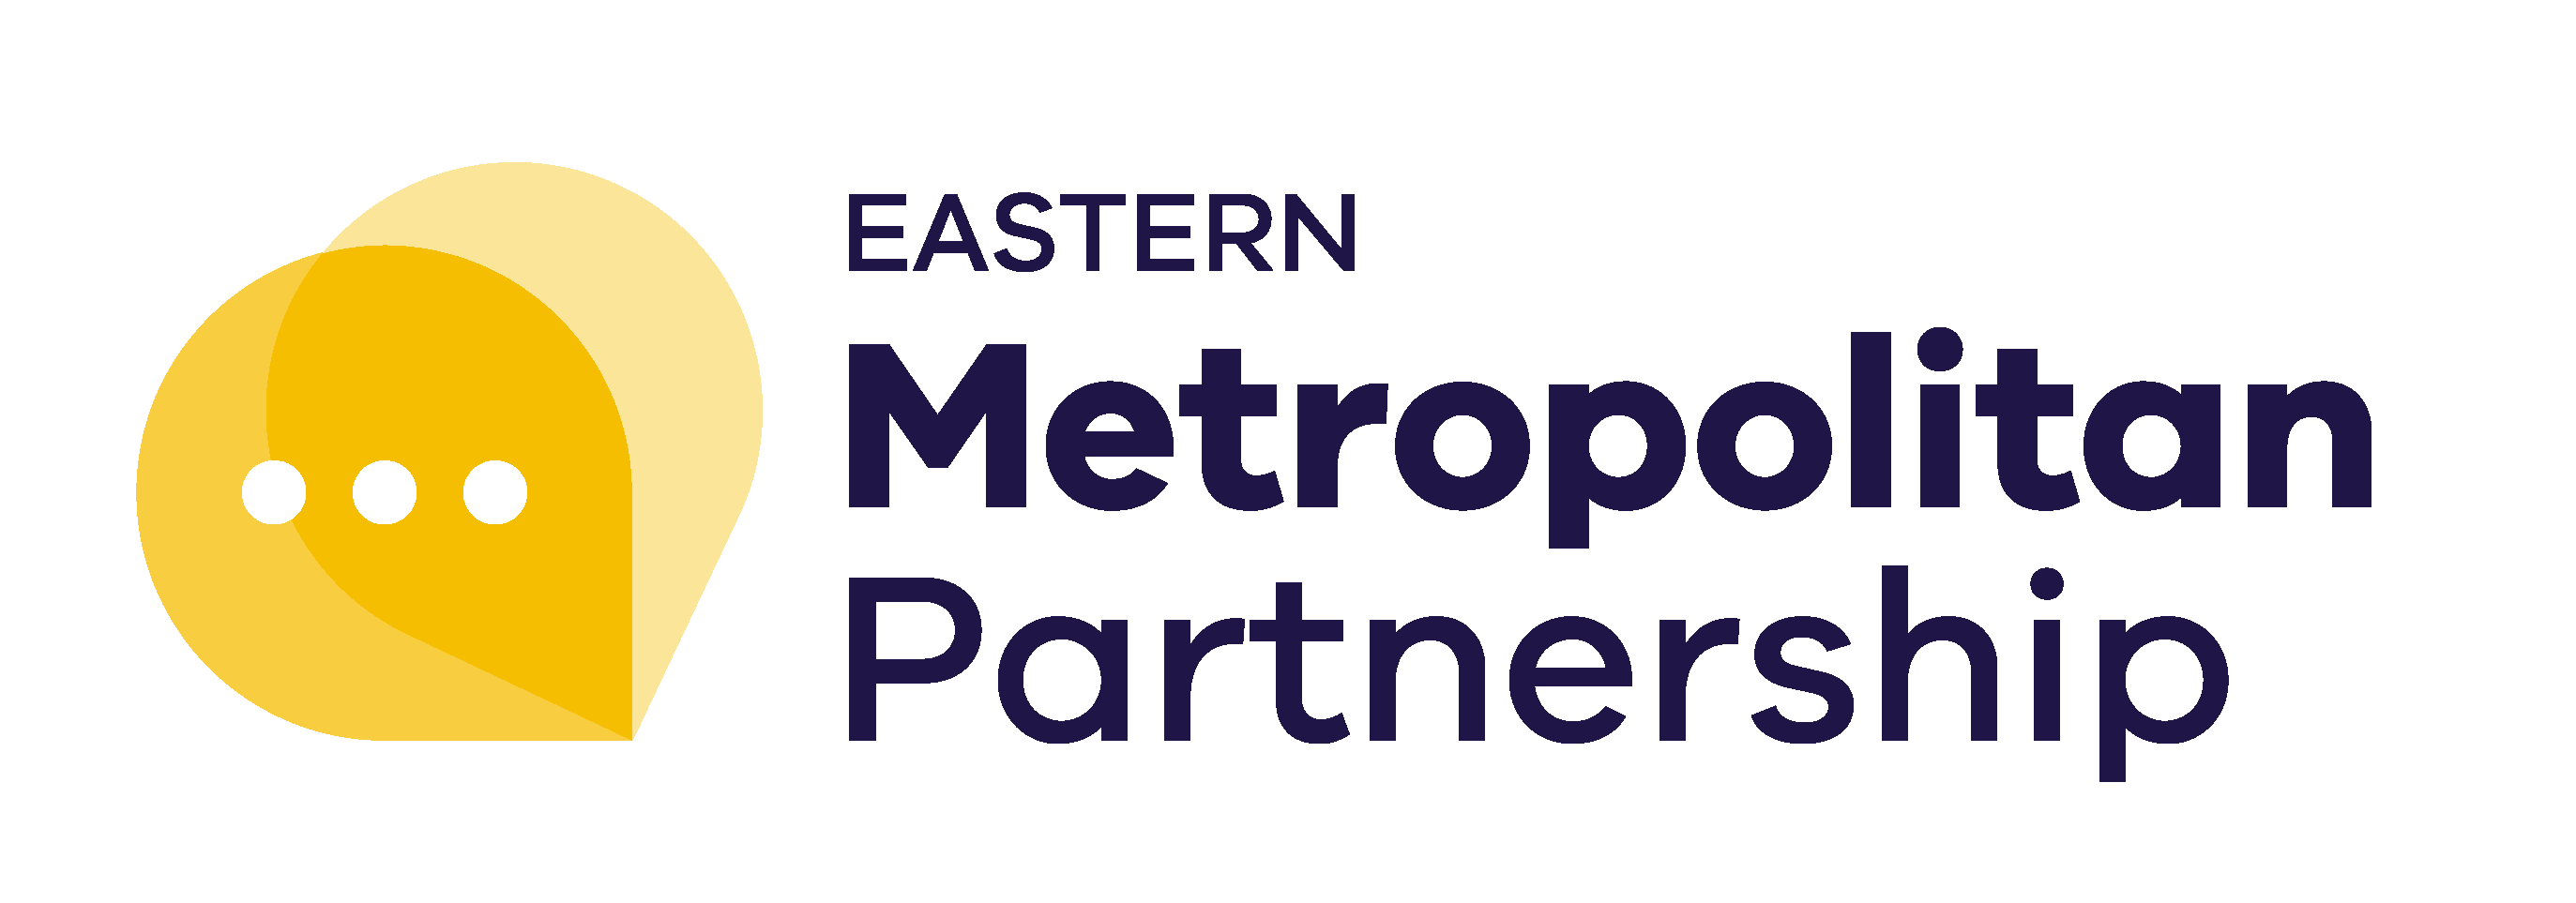 Eastern Metropolitan Partnership